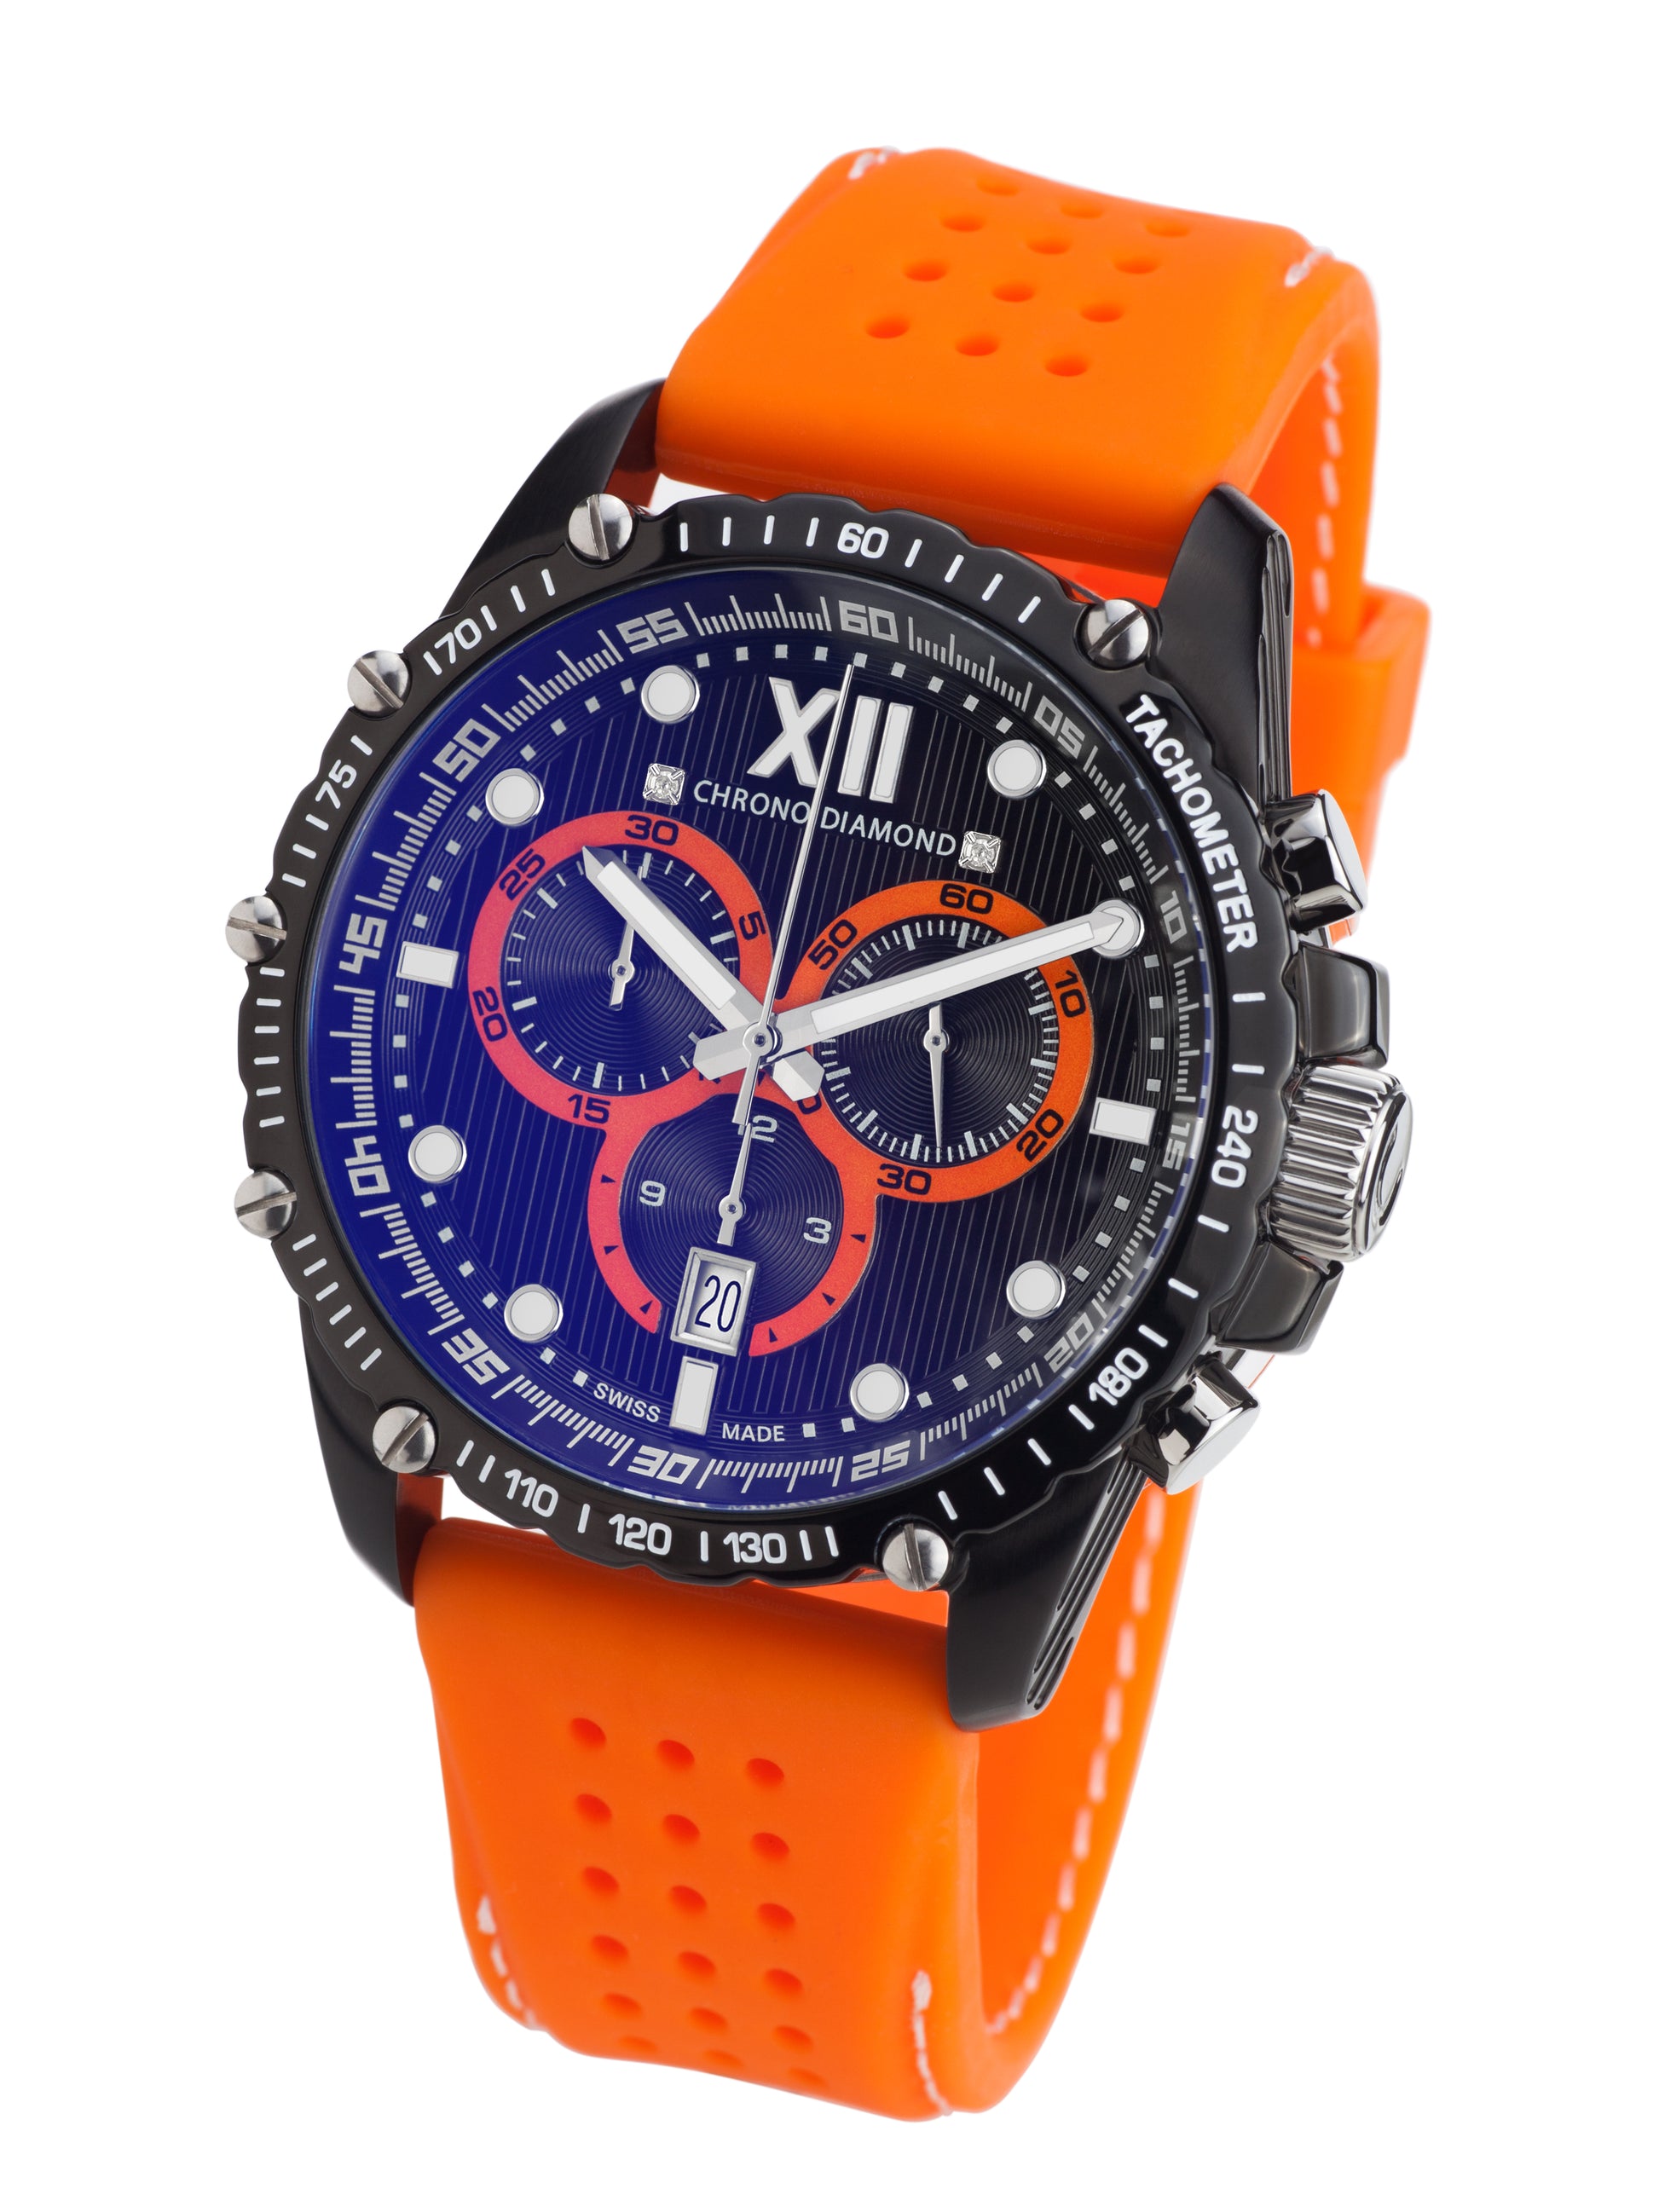 Automatic watches — Neelos — Chrono Diamond — black IP orange